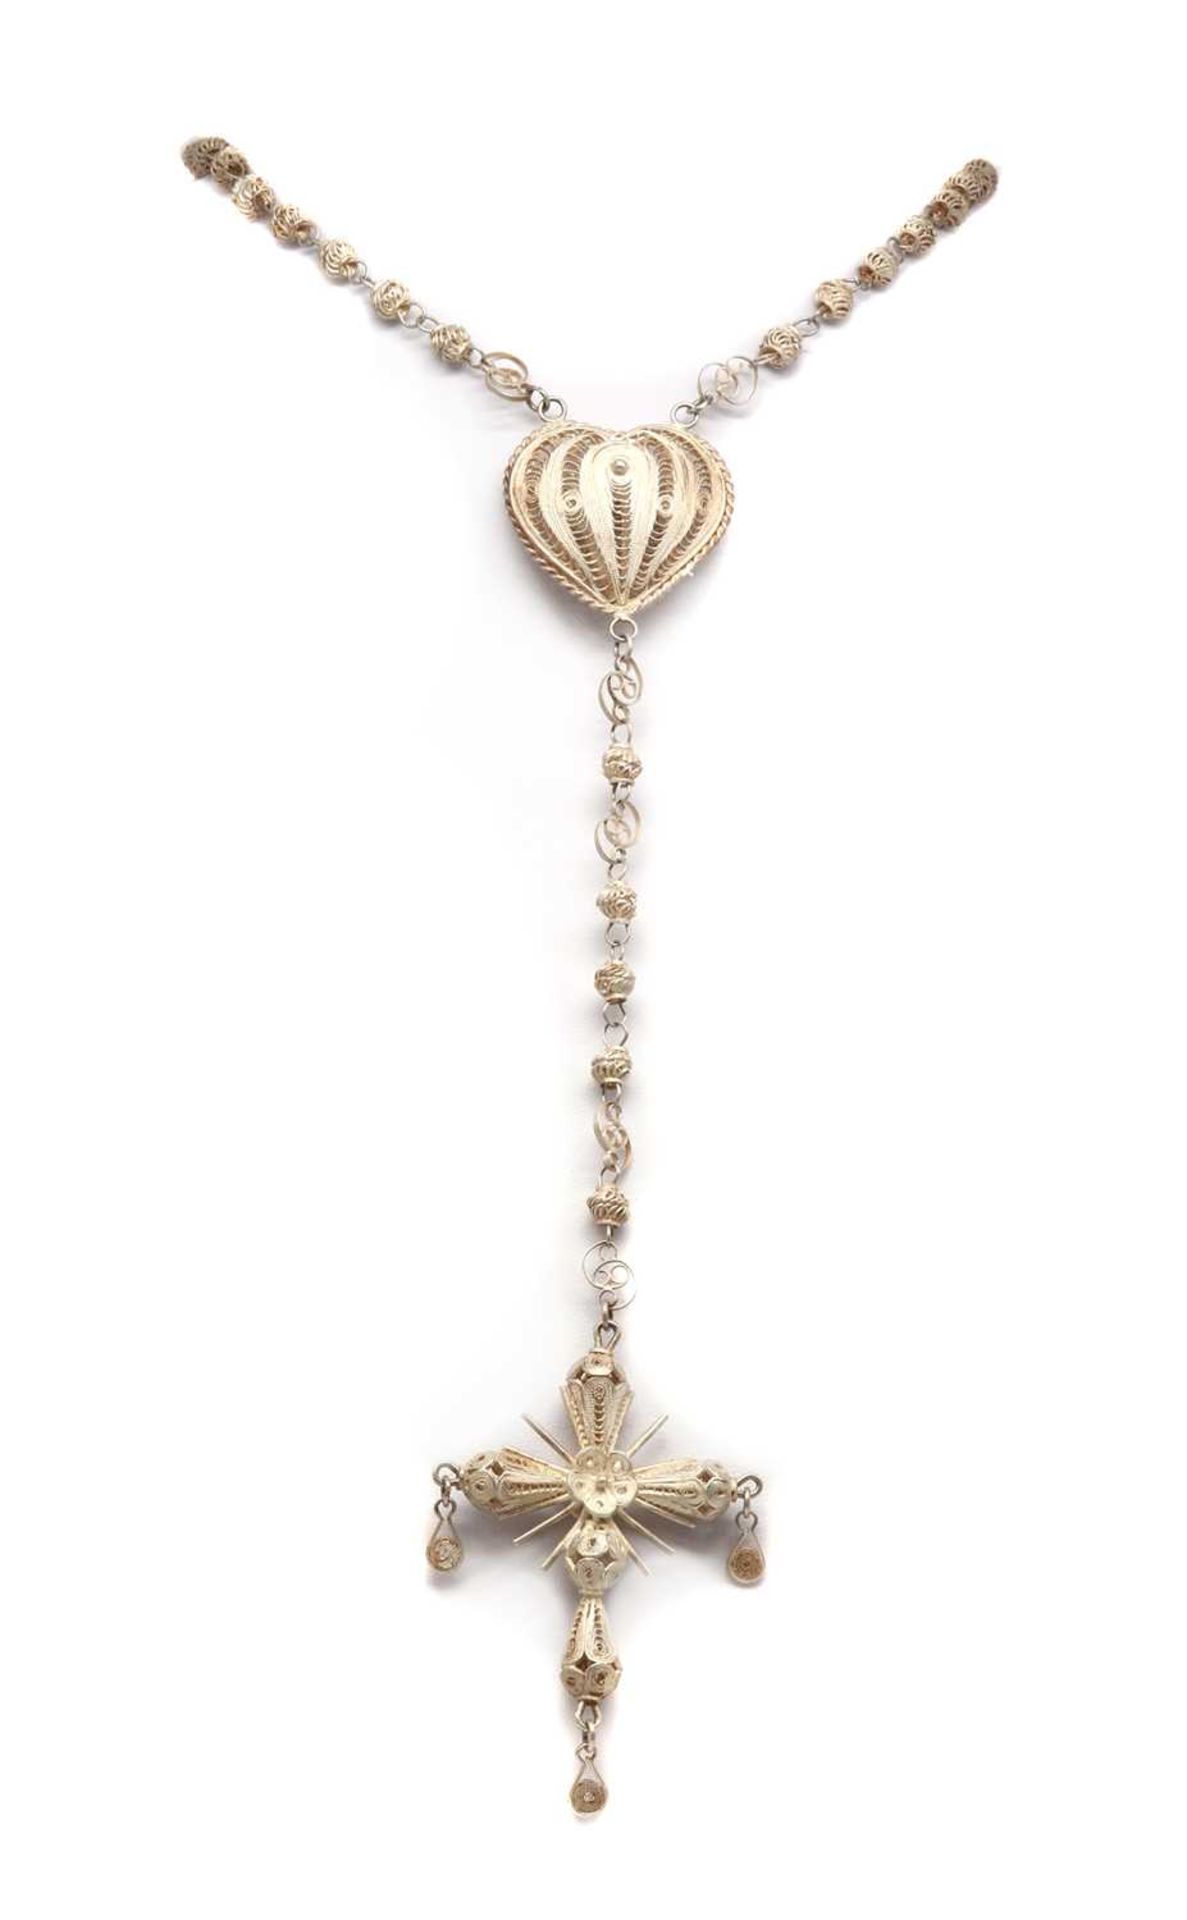 A silver filigree rosary,